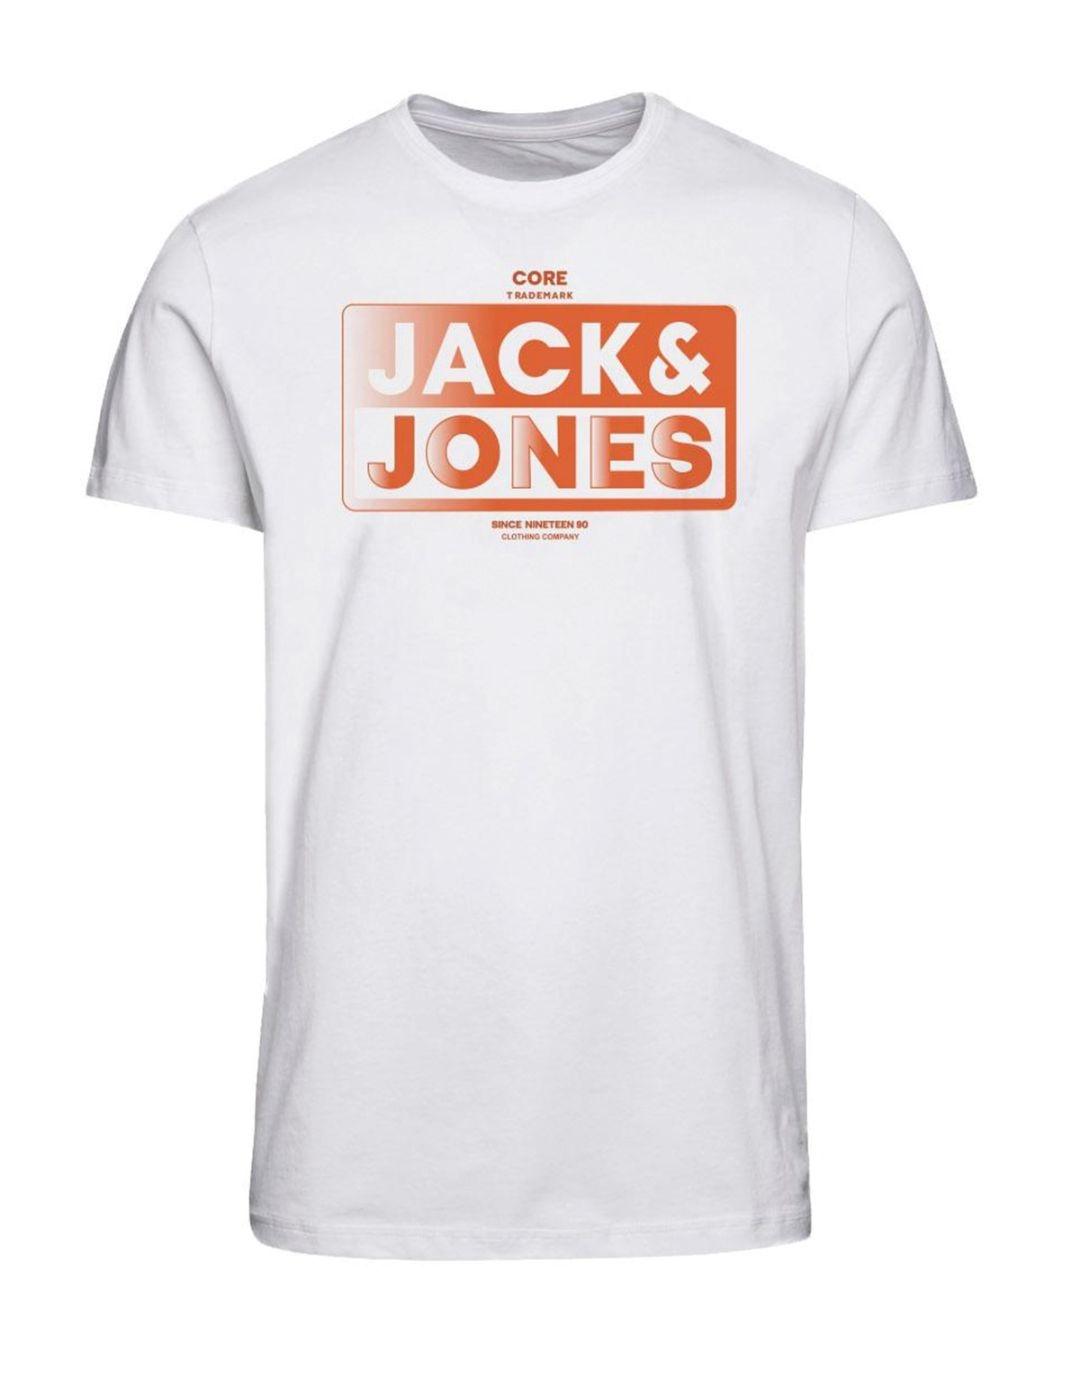 Camiseta Jack&Jones Kim blanca y naranja hombre -b